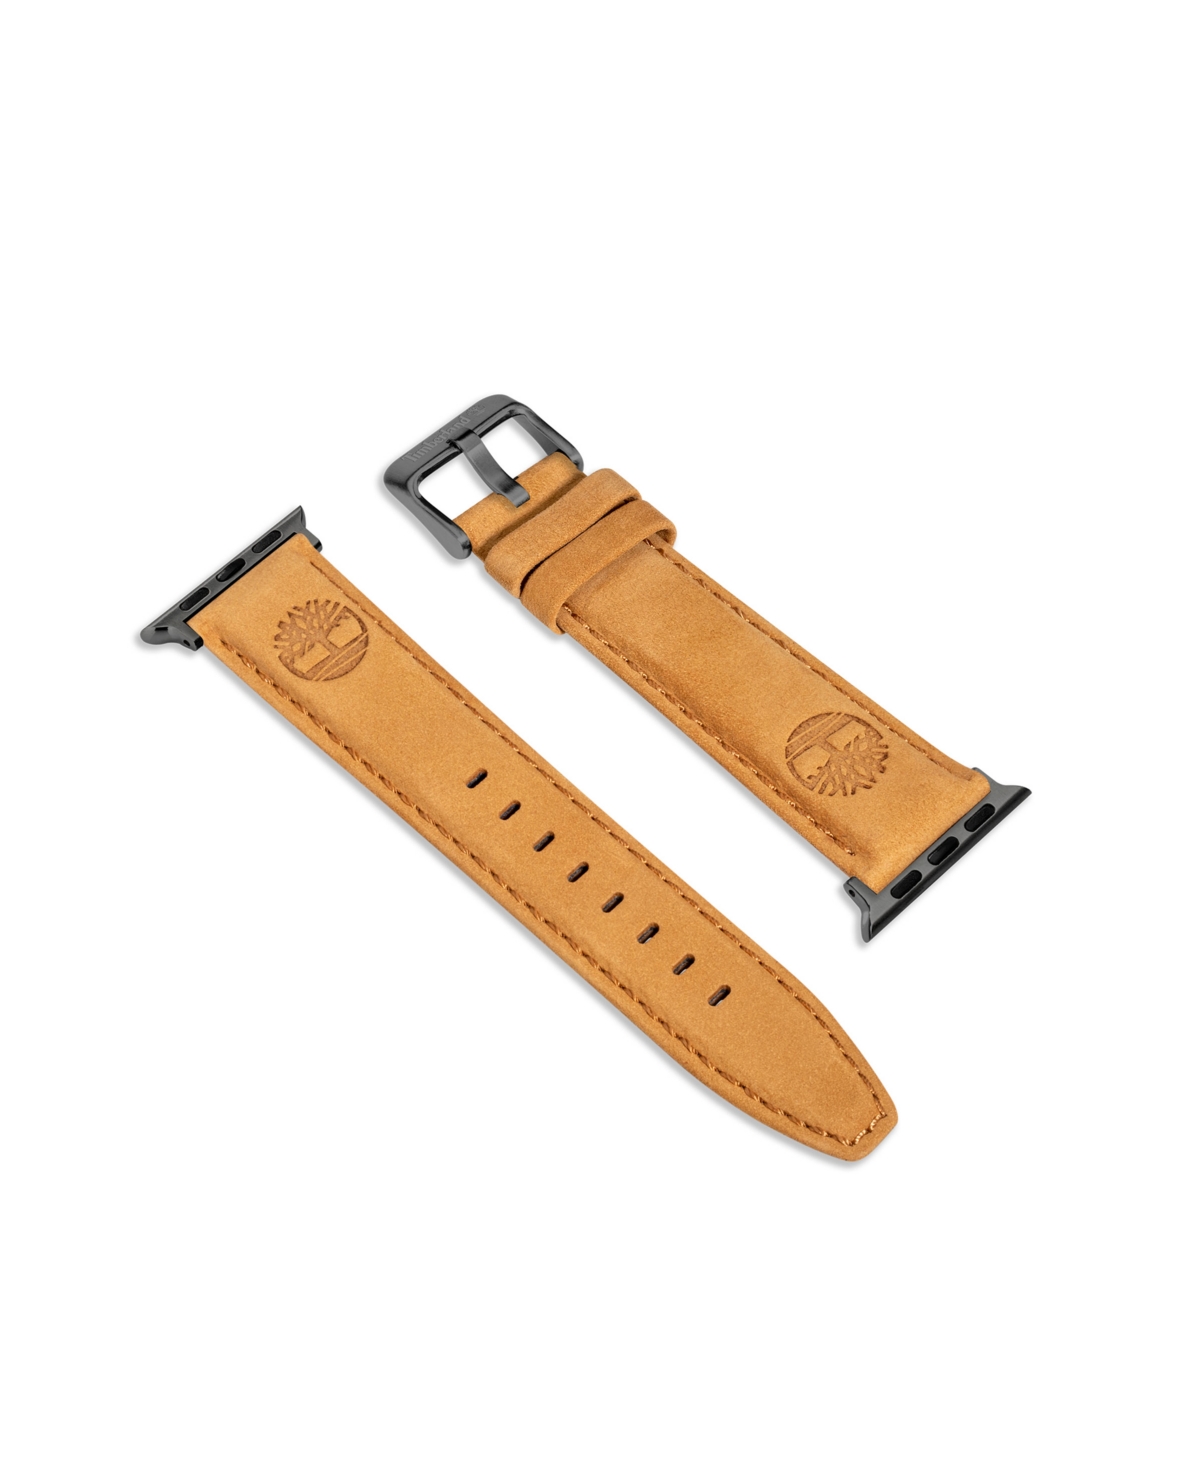 Unisex Lacandon Wheat Genuine Leather Universal Smart Watch Strap 22mm - Wheat